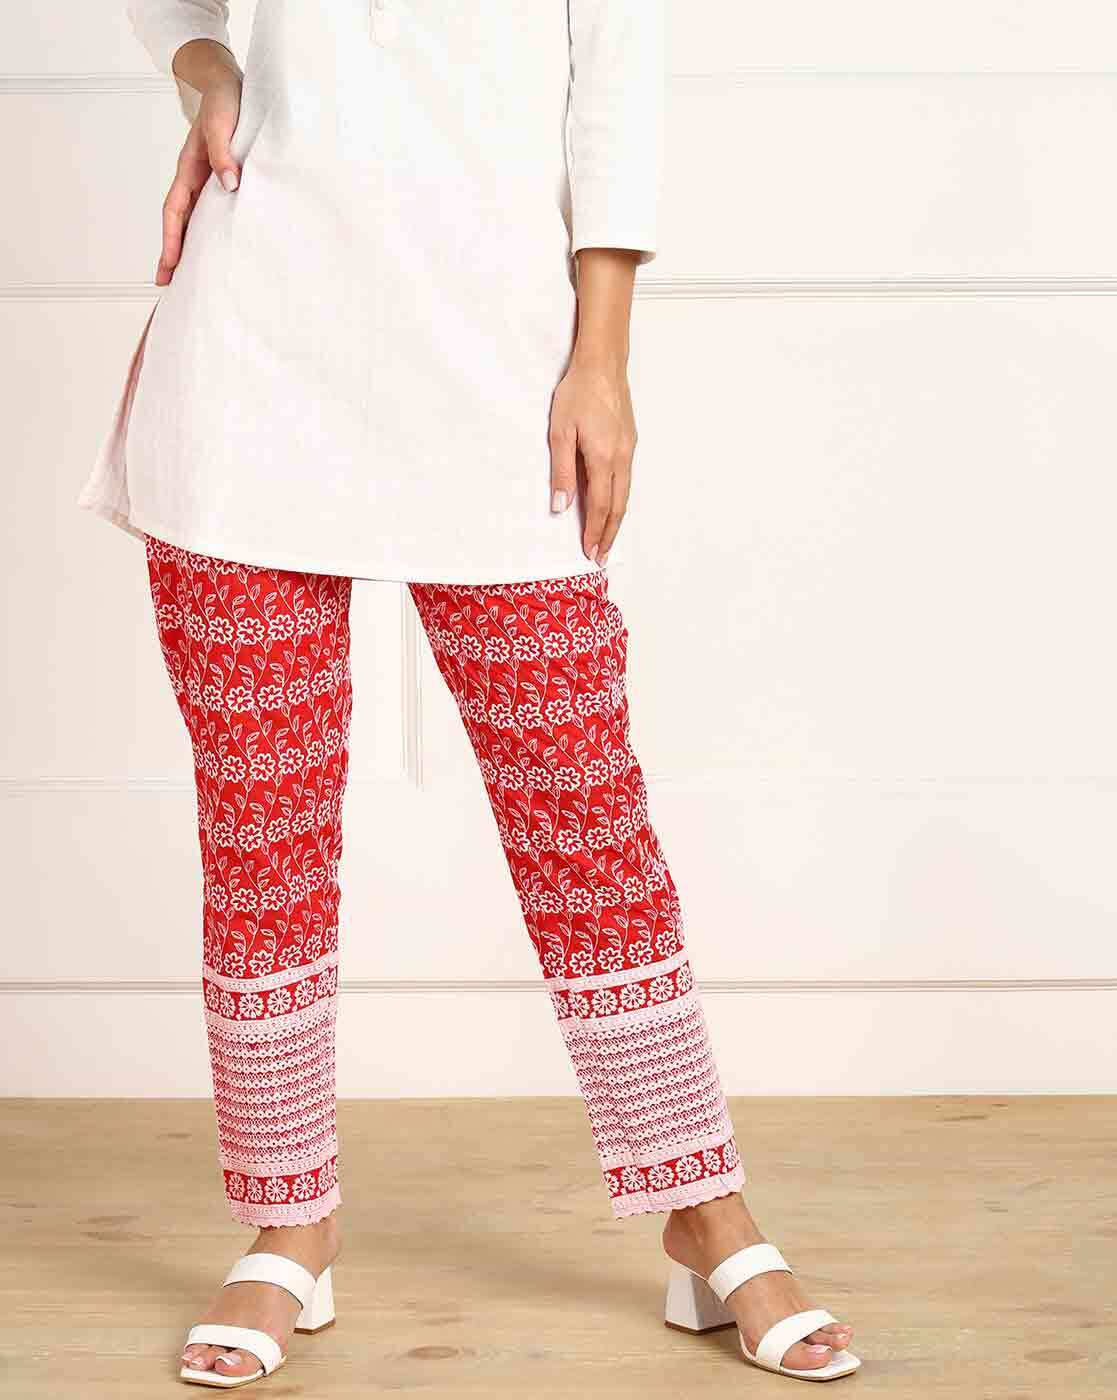 Double Printed Widelegged Trousers with Back Pockets and Slits  ILAMRA   Sustainable Clothing Brand India